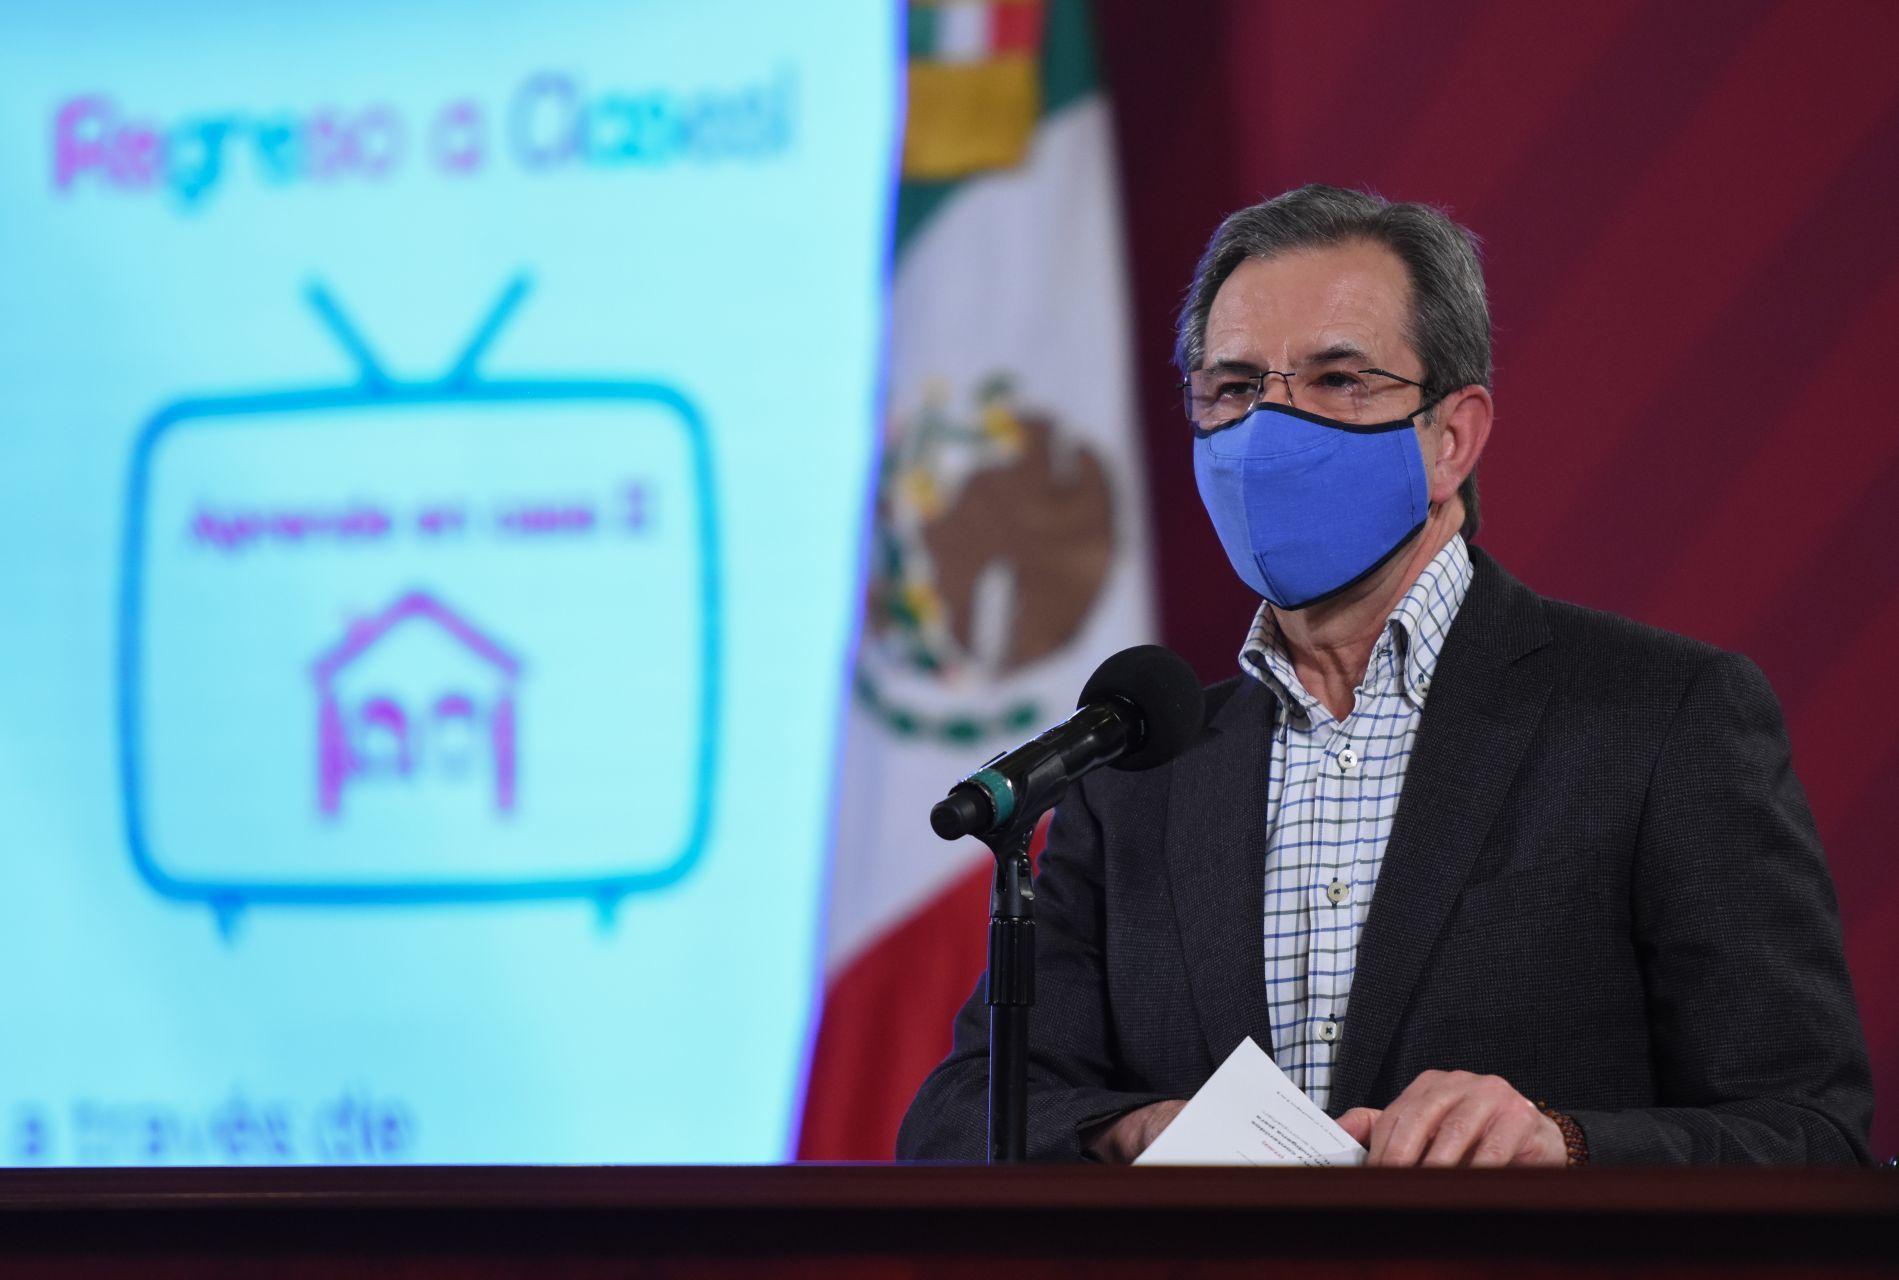 Esteban Moctezuma será el próximo embajador de México en EU tras jubilación de Bárcena